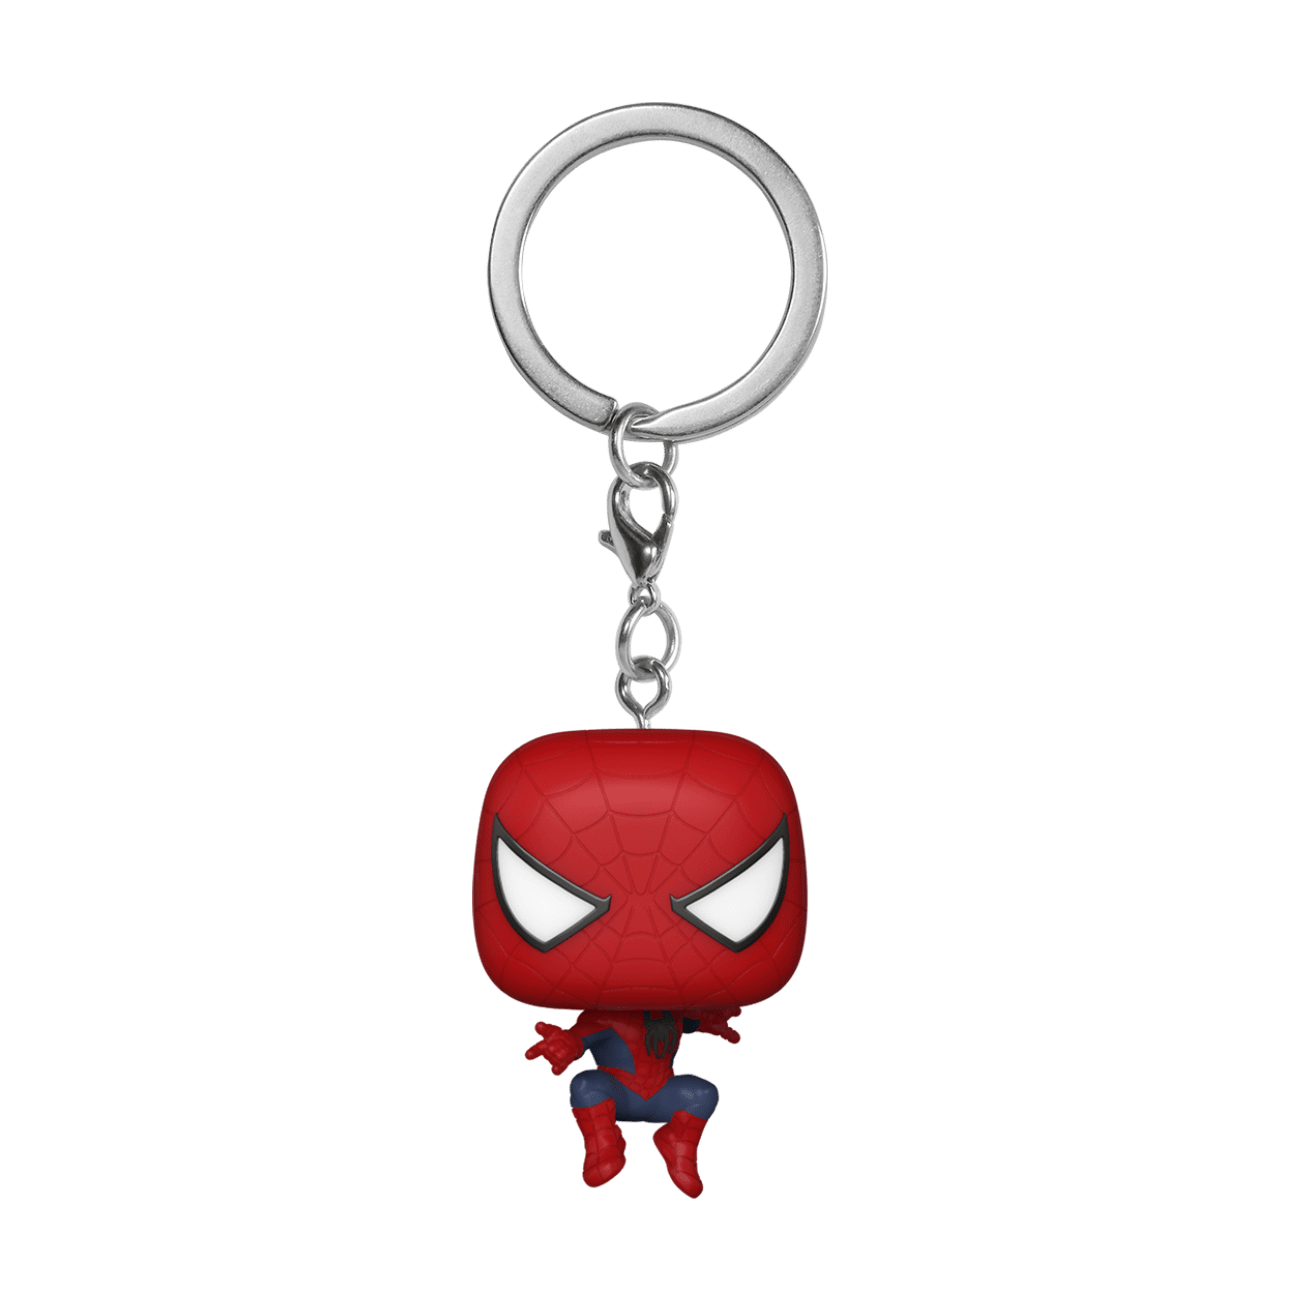 Funko Pocket Pop! Keychain Marvel Studios Spider-man No Way Home Friendly Neighborhood Spider-man